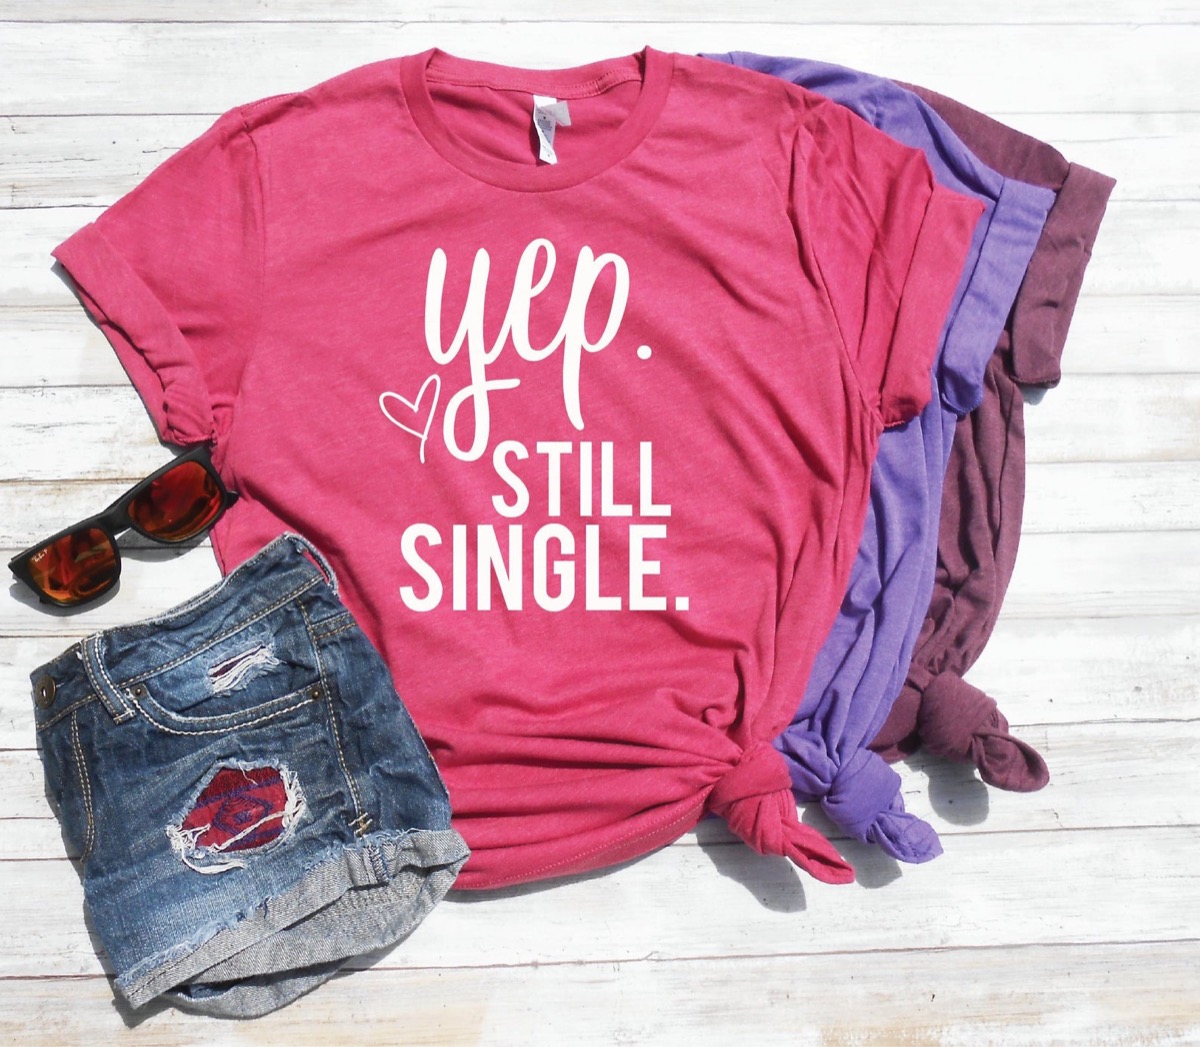 pink shirt with "yep still single" on it